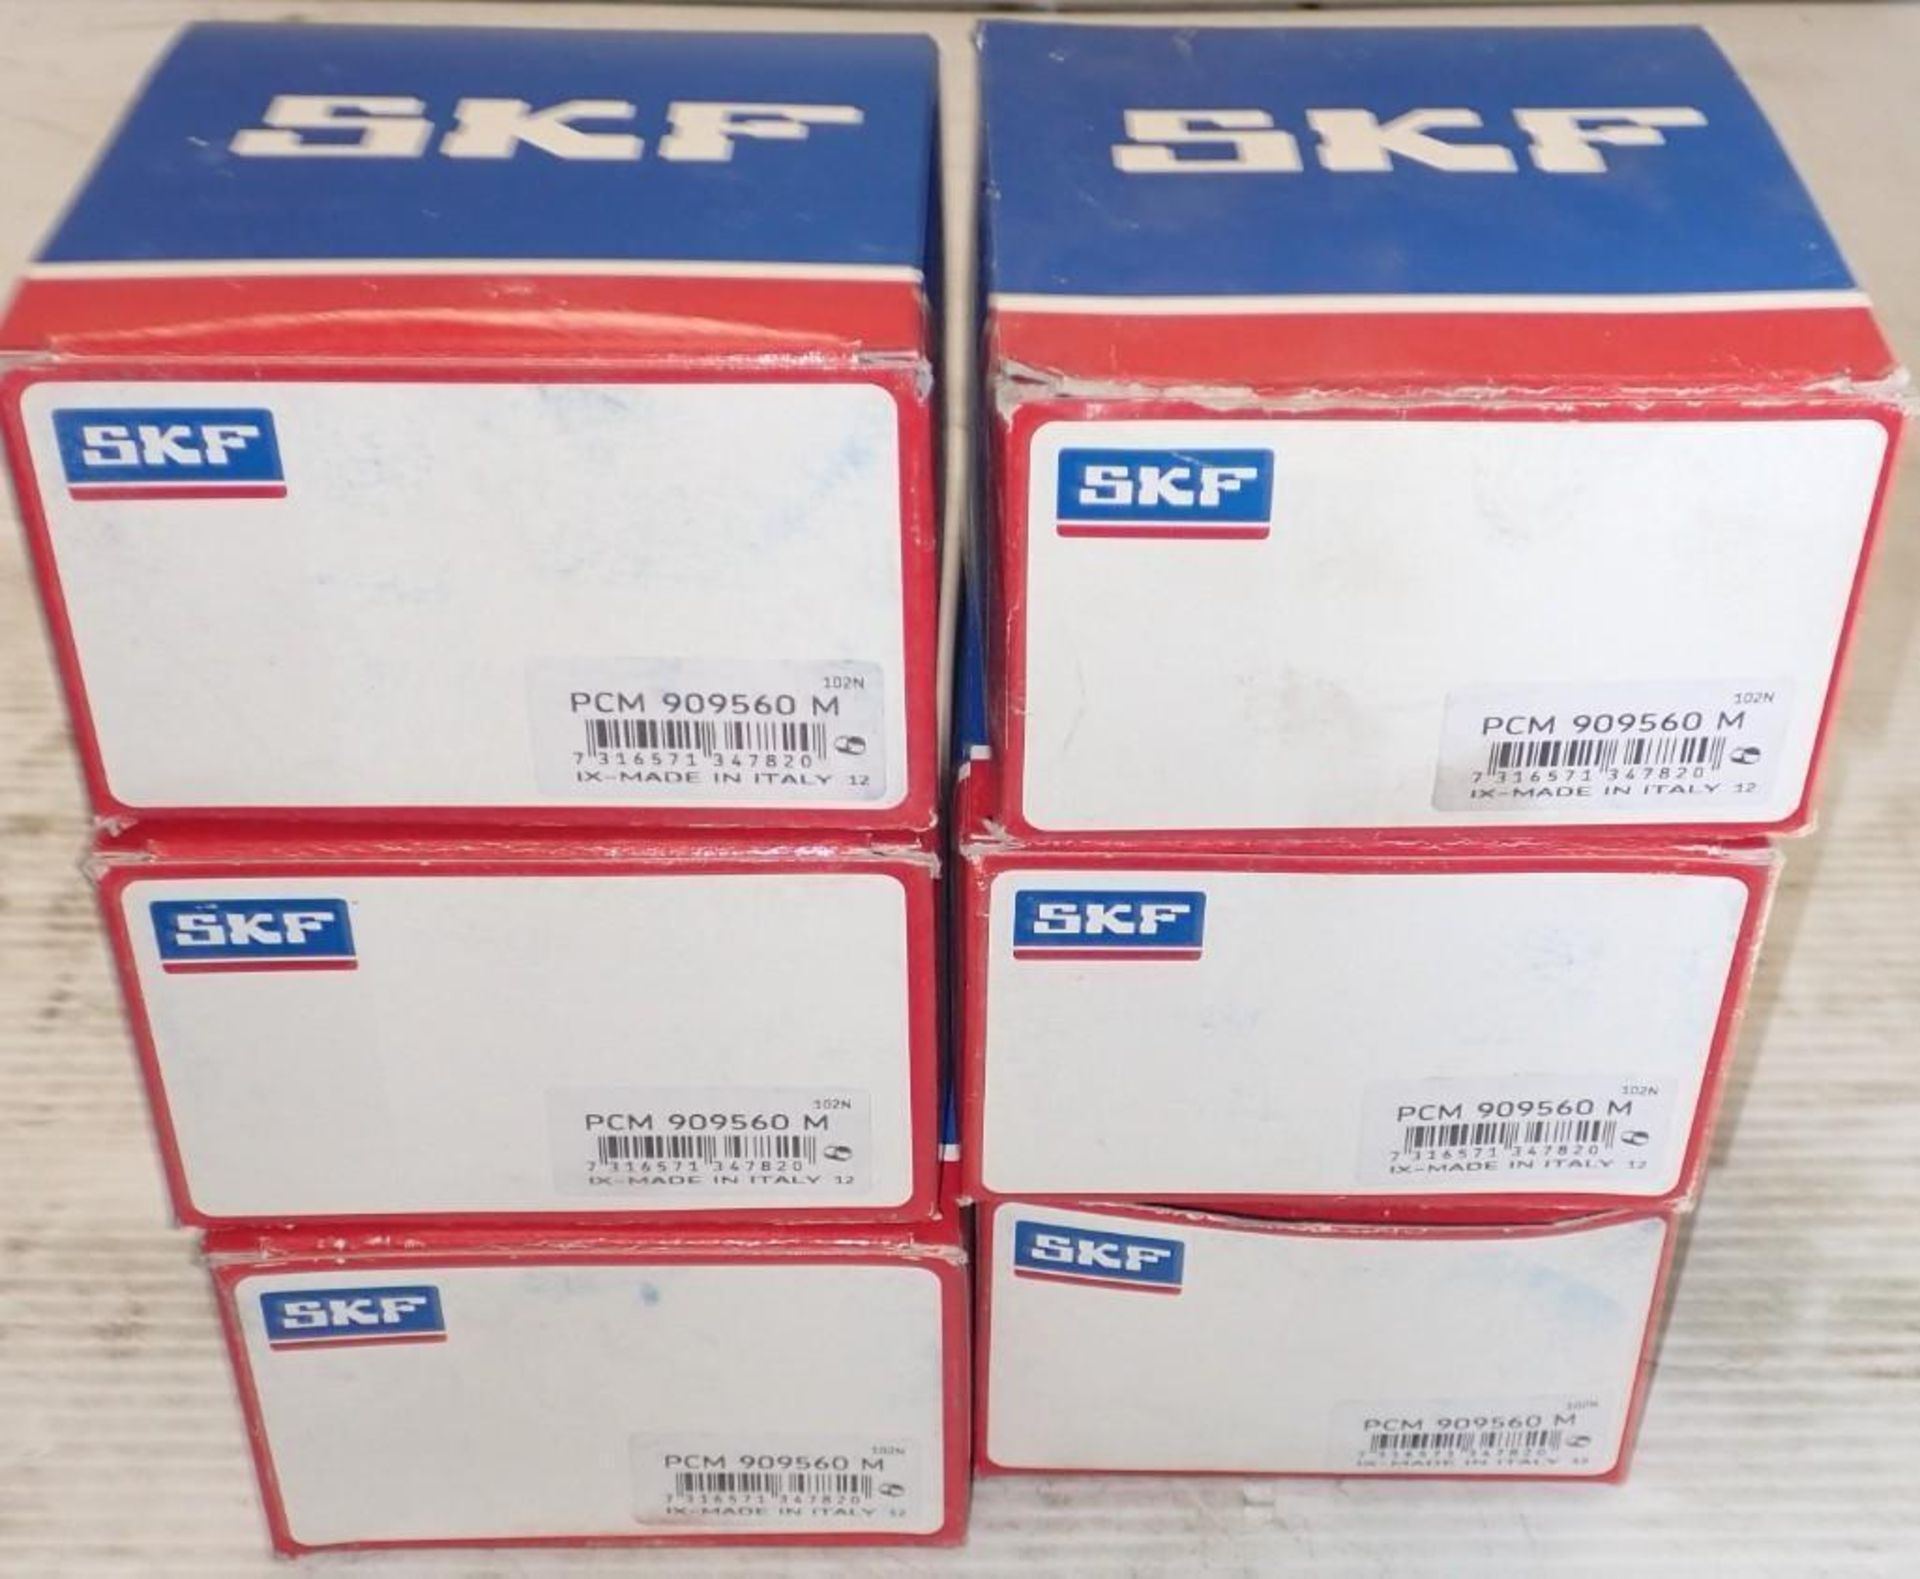 SKF # PCM 909560M Bearings - Image 2 of 2